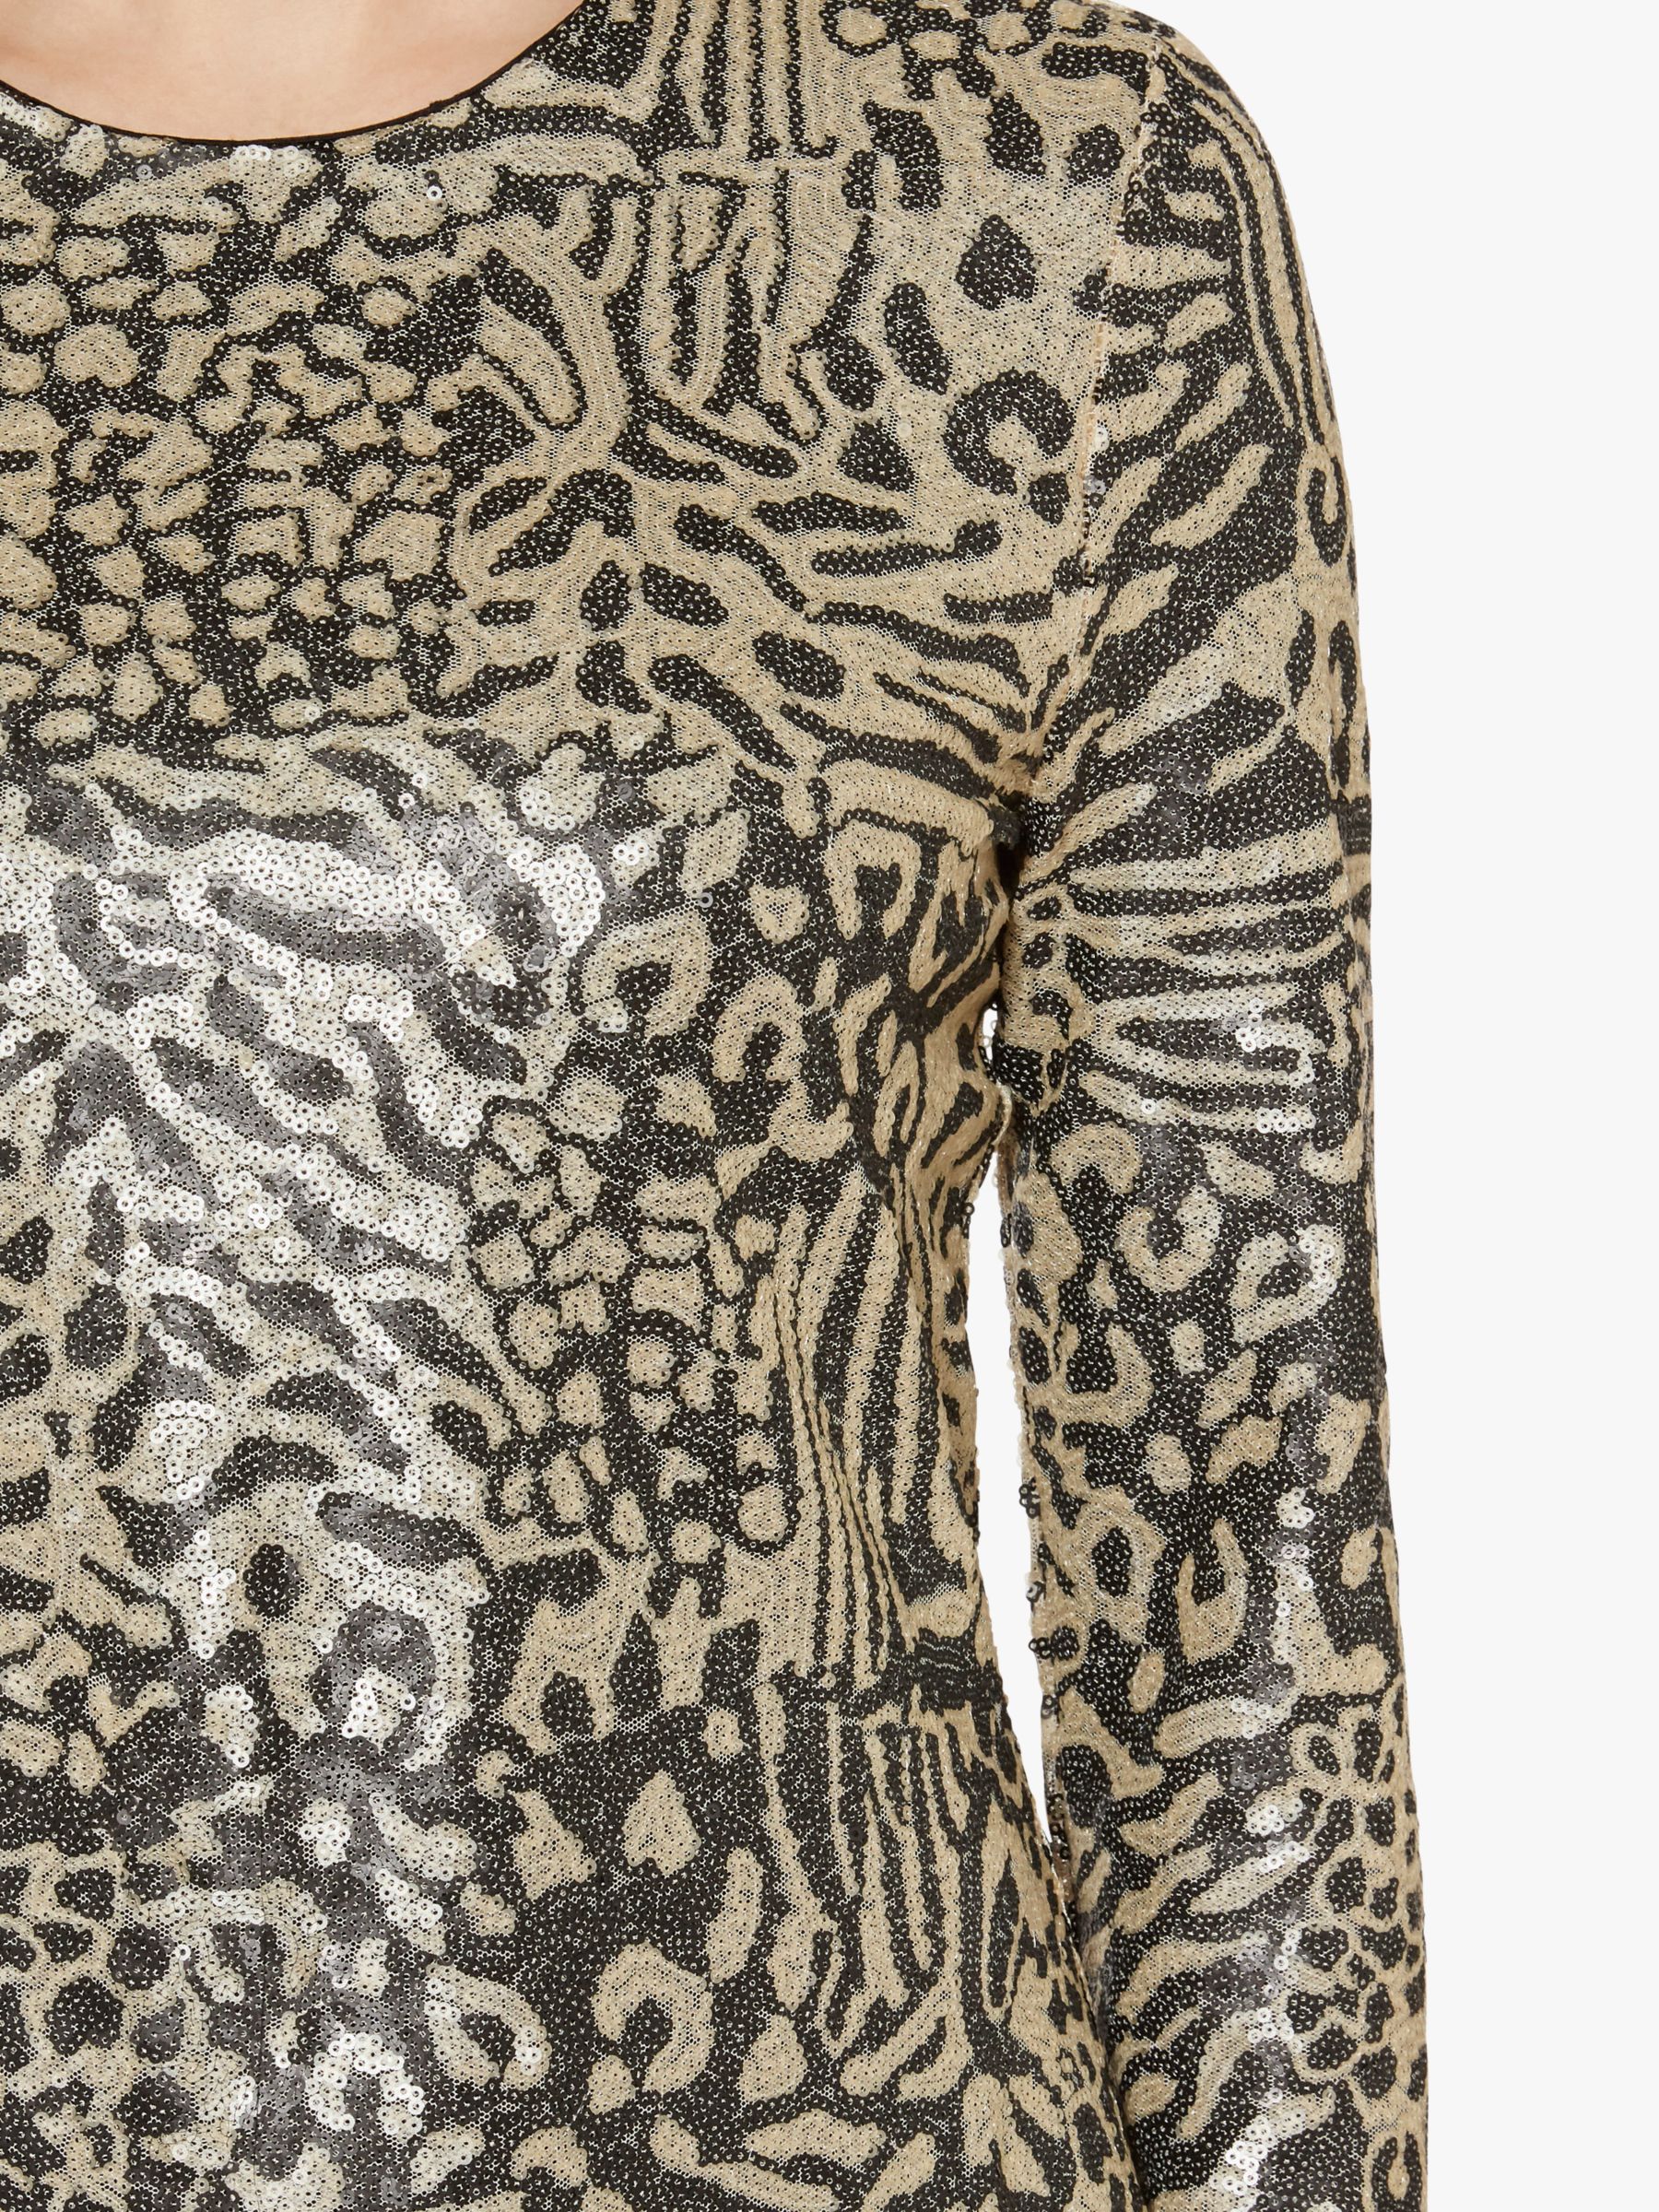 Gina Bacconi Ceri Abstract Animal Sequin Dress, Neutral at John Lewis ...